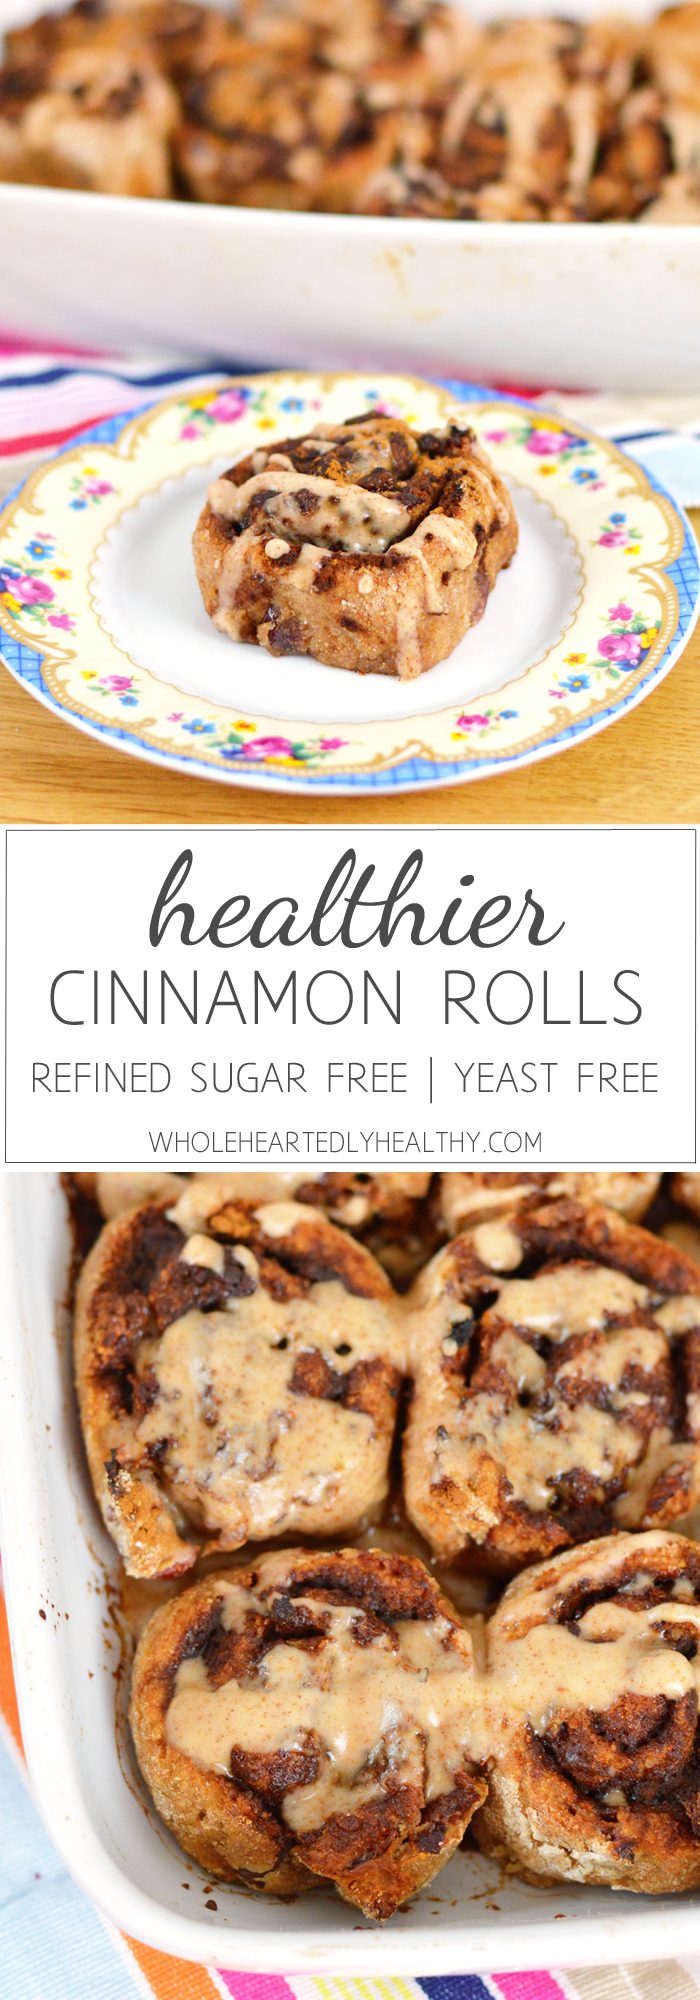 Healthy cinnamon roll recipe